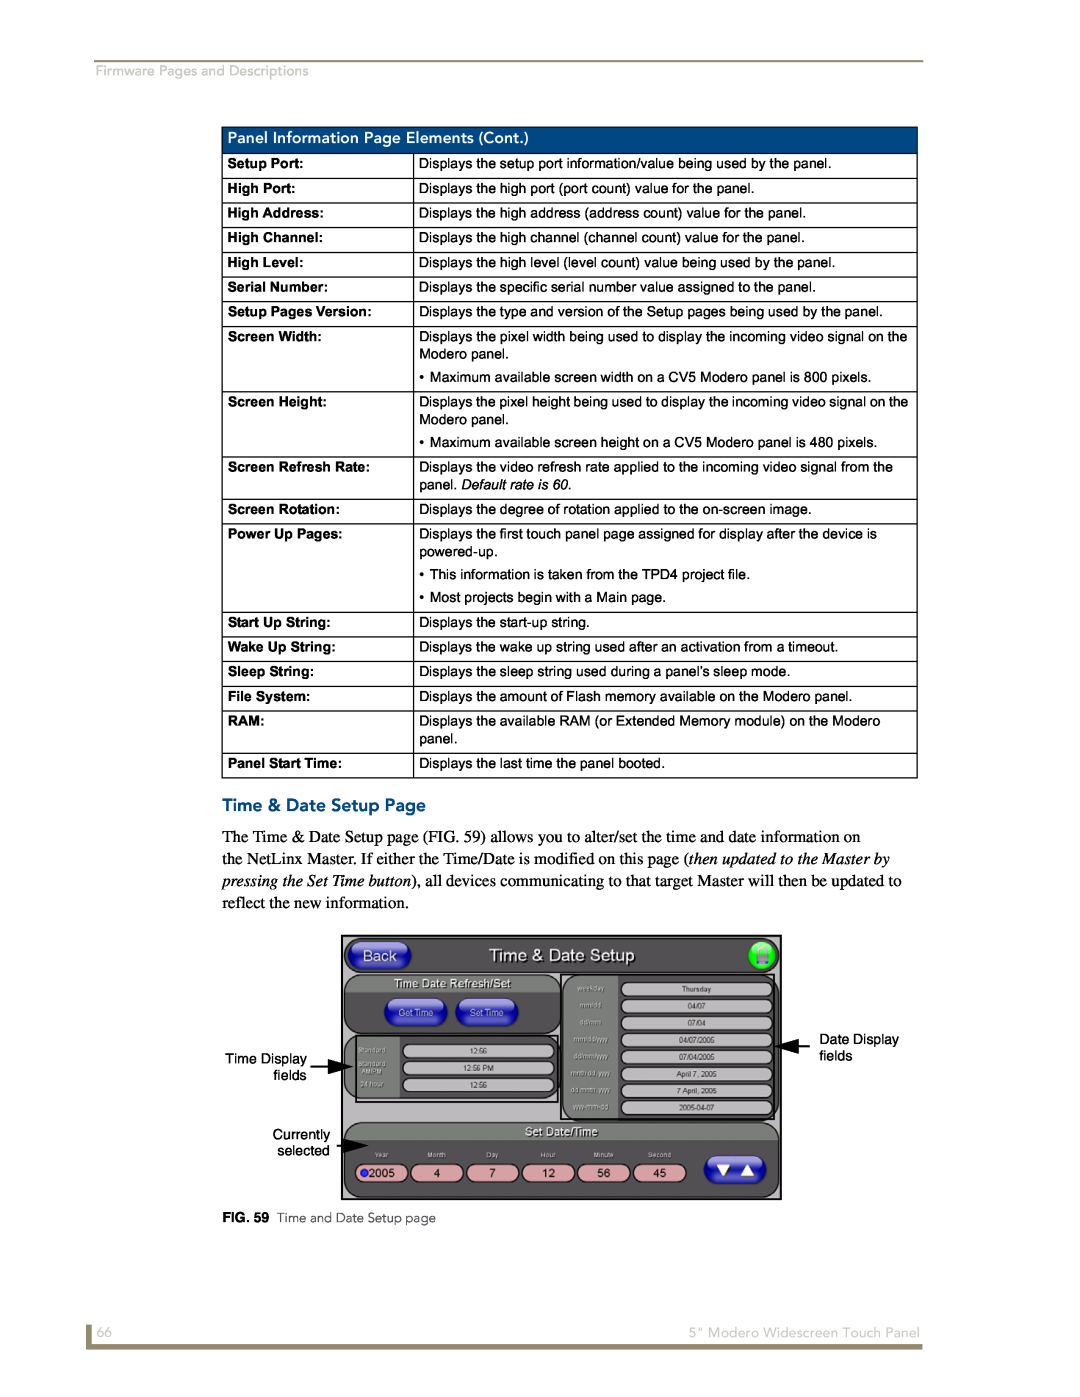 AMX NXD-CV5 Time & Date Setup Page, Panel Information Page Elements Cont, Firmware Pages and Descriptions, Setup Port 